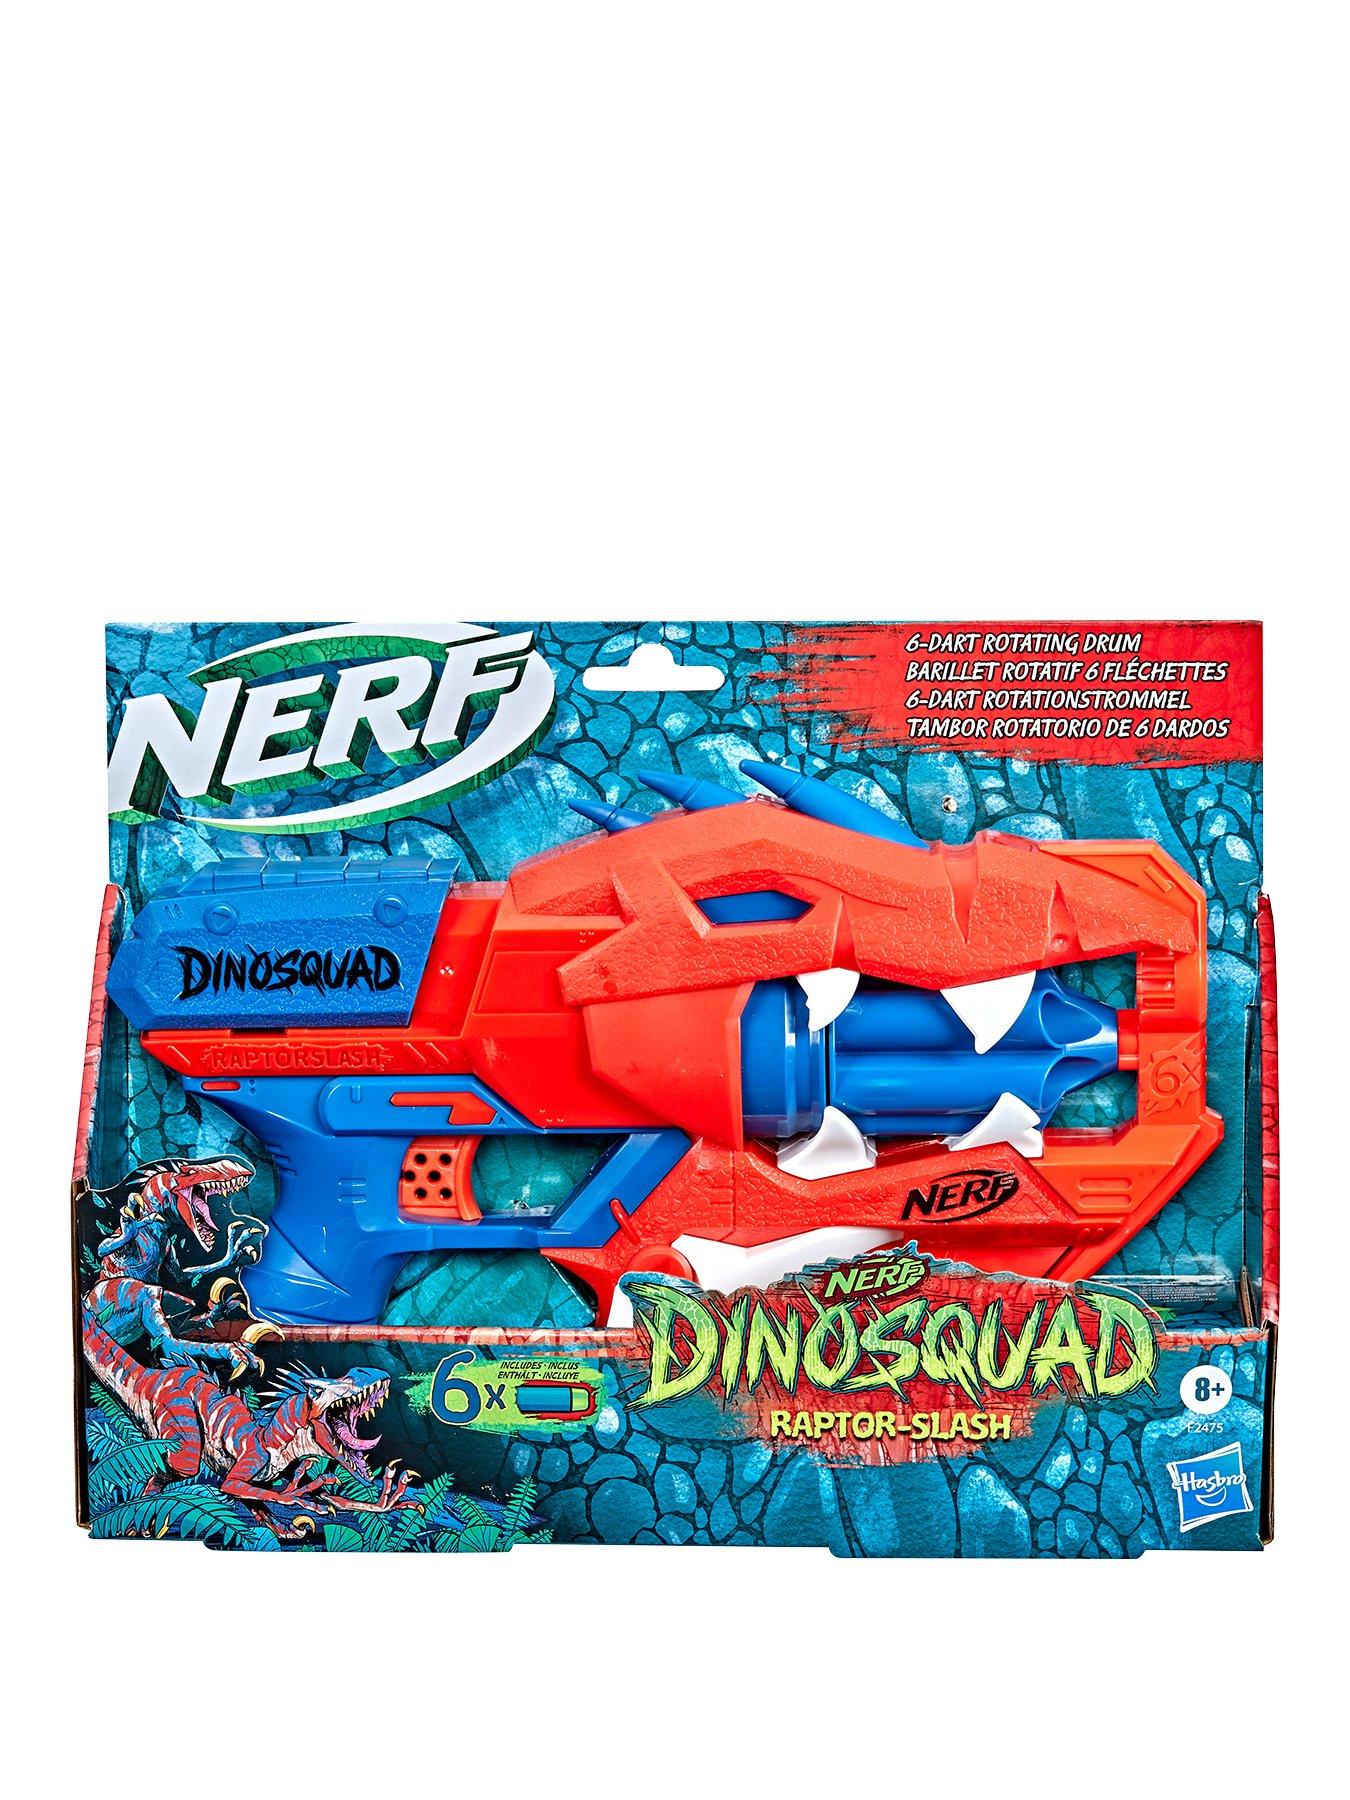 Nerf DinoSquad Raptor-Slash Dart Blaster, 6-Dart Rotating Drum, Slam Fire,  6 Nerf Darts, Velociraptor Dinosaur Design - Nerf